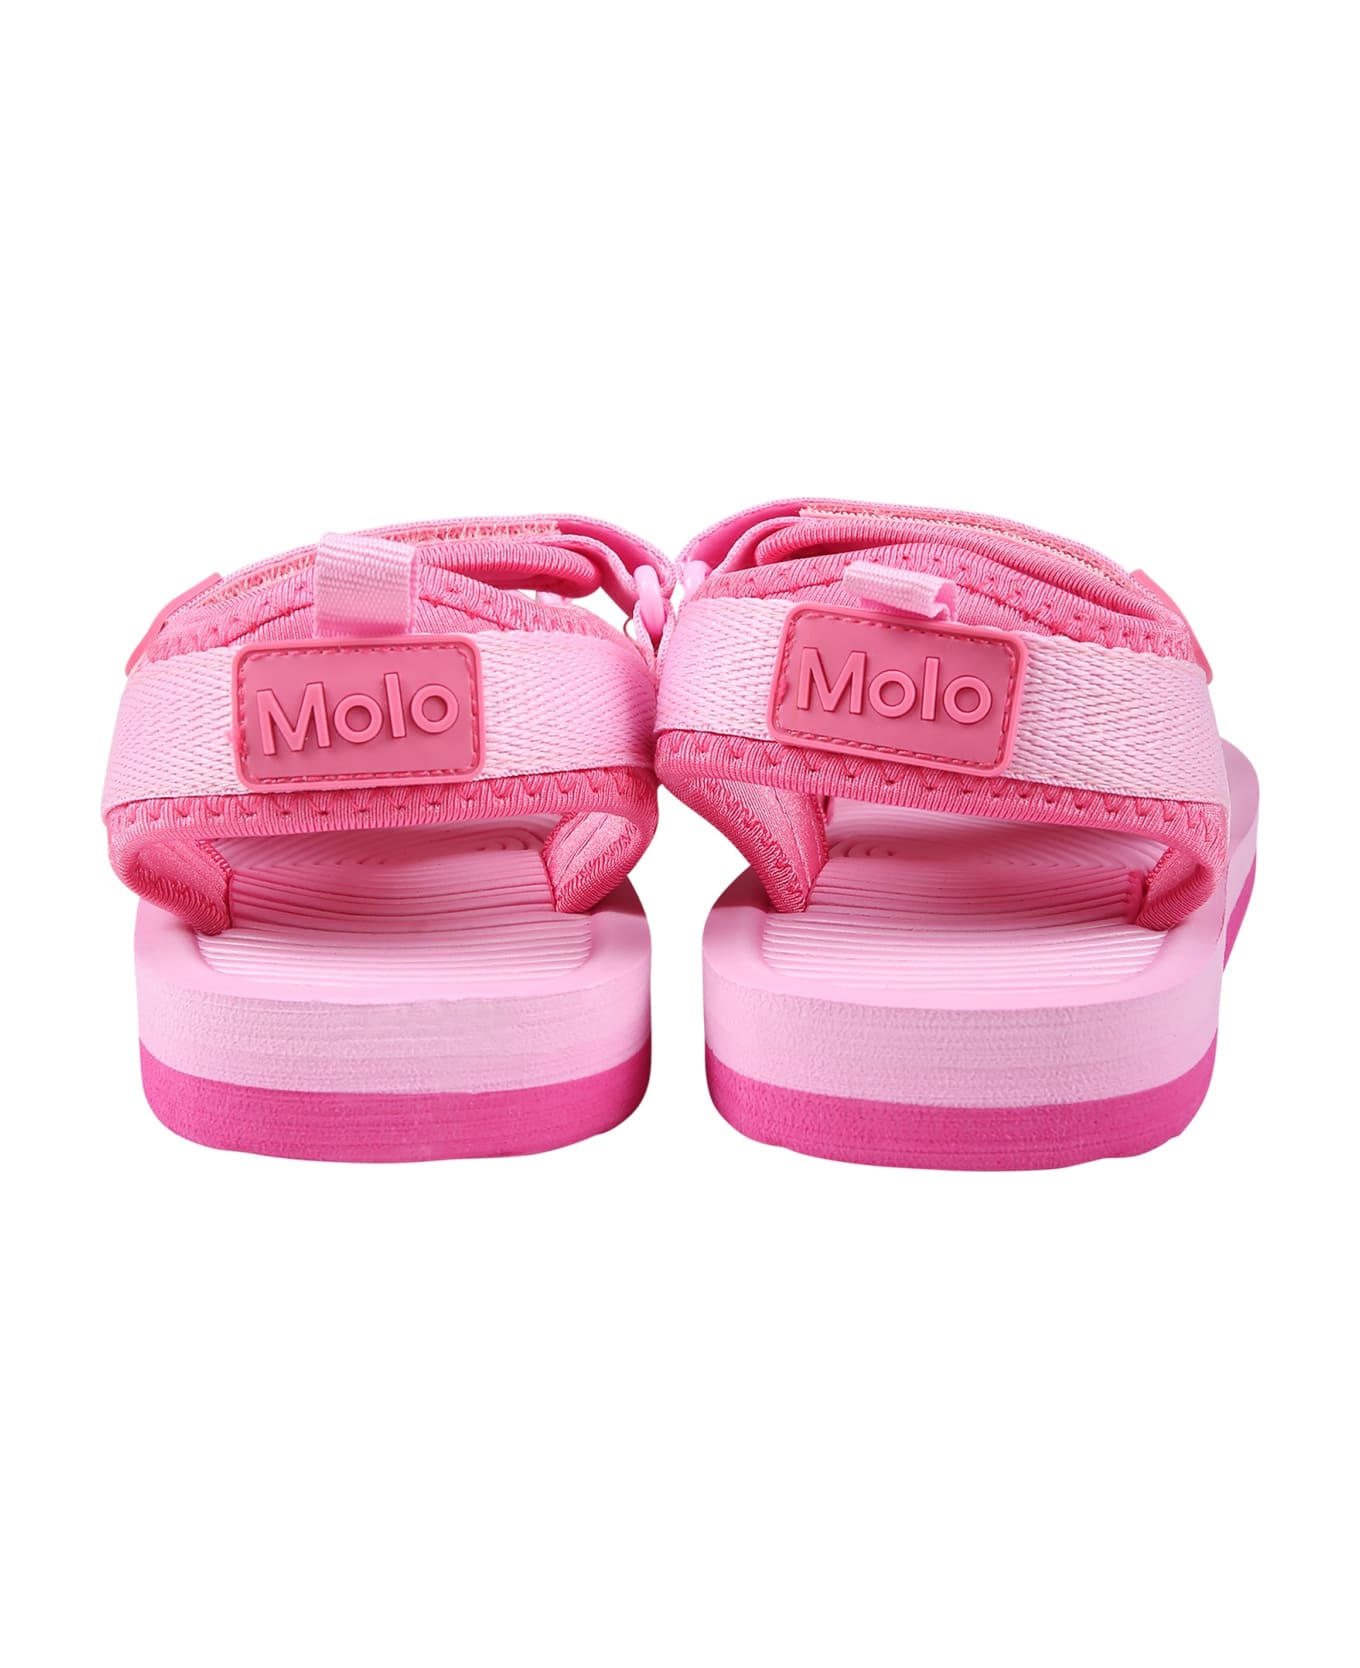 Molo Fuchsia Sandals For Girl With Logo - Fuchsia